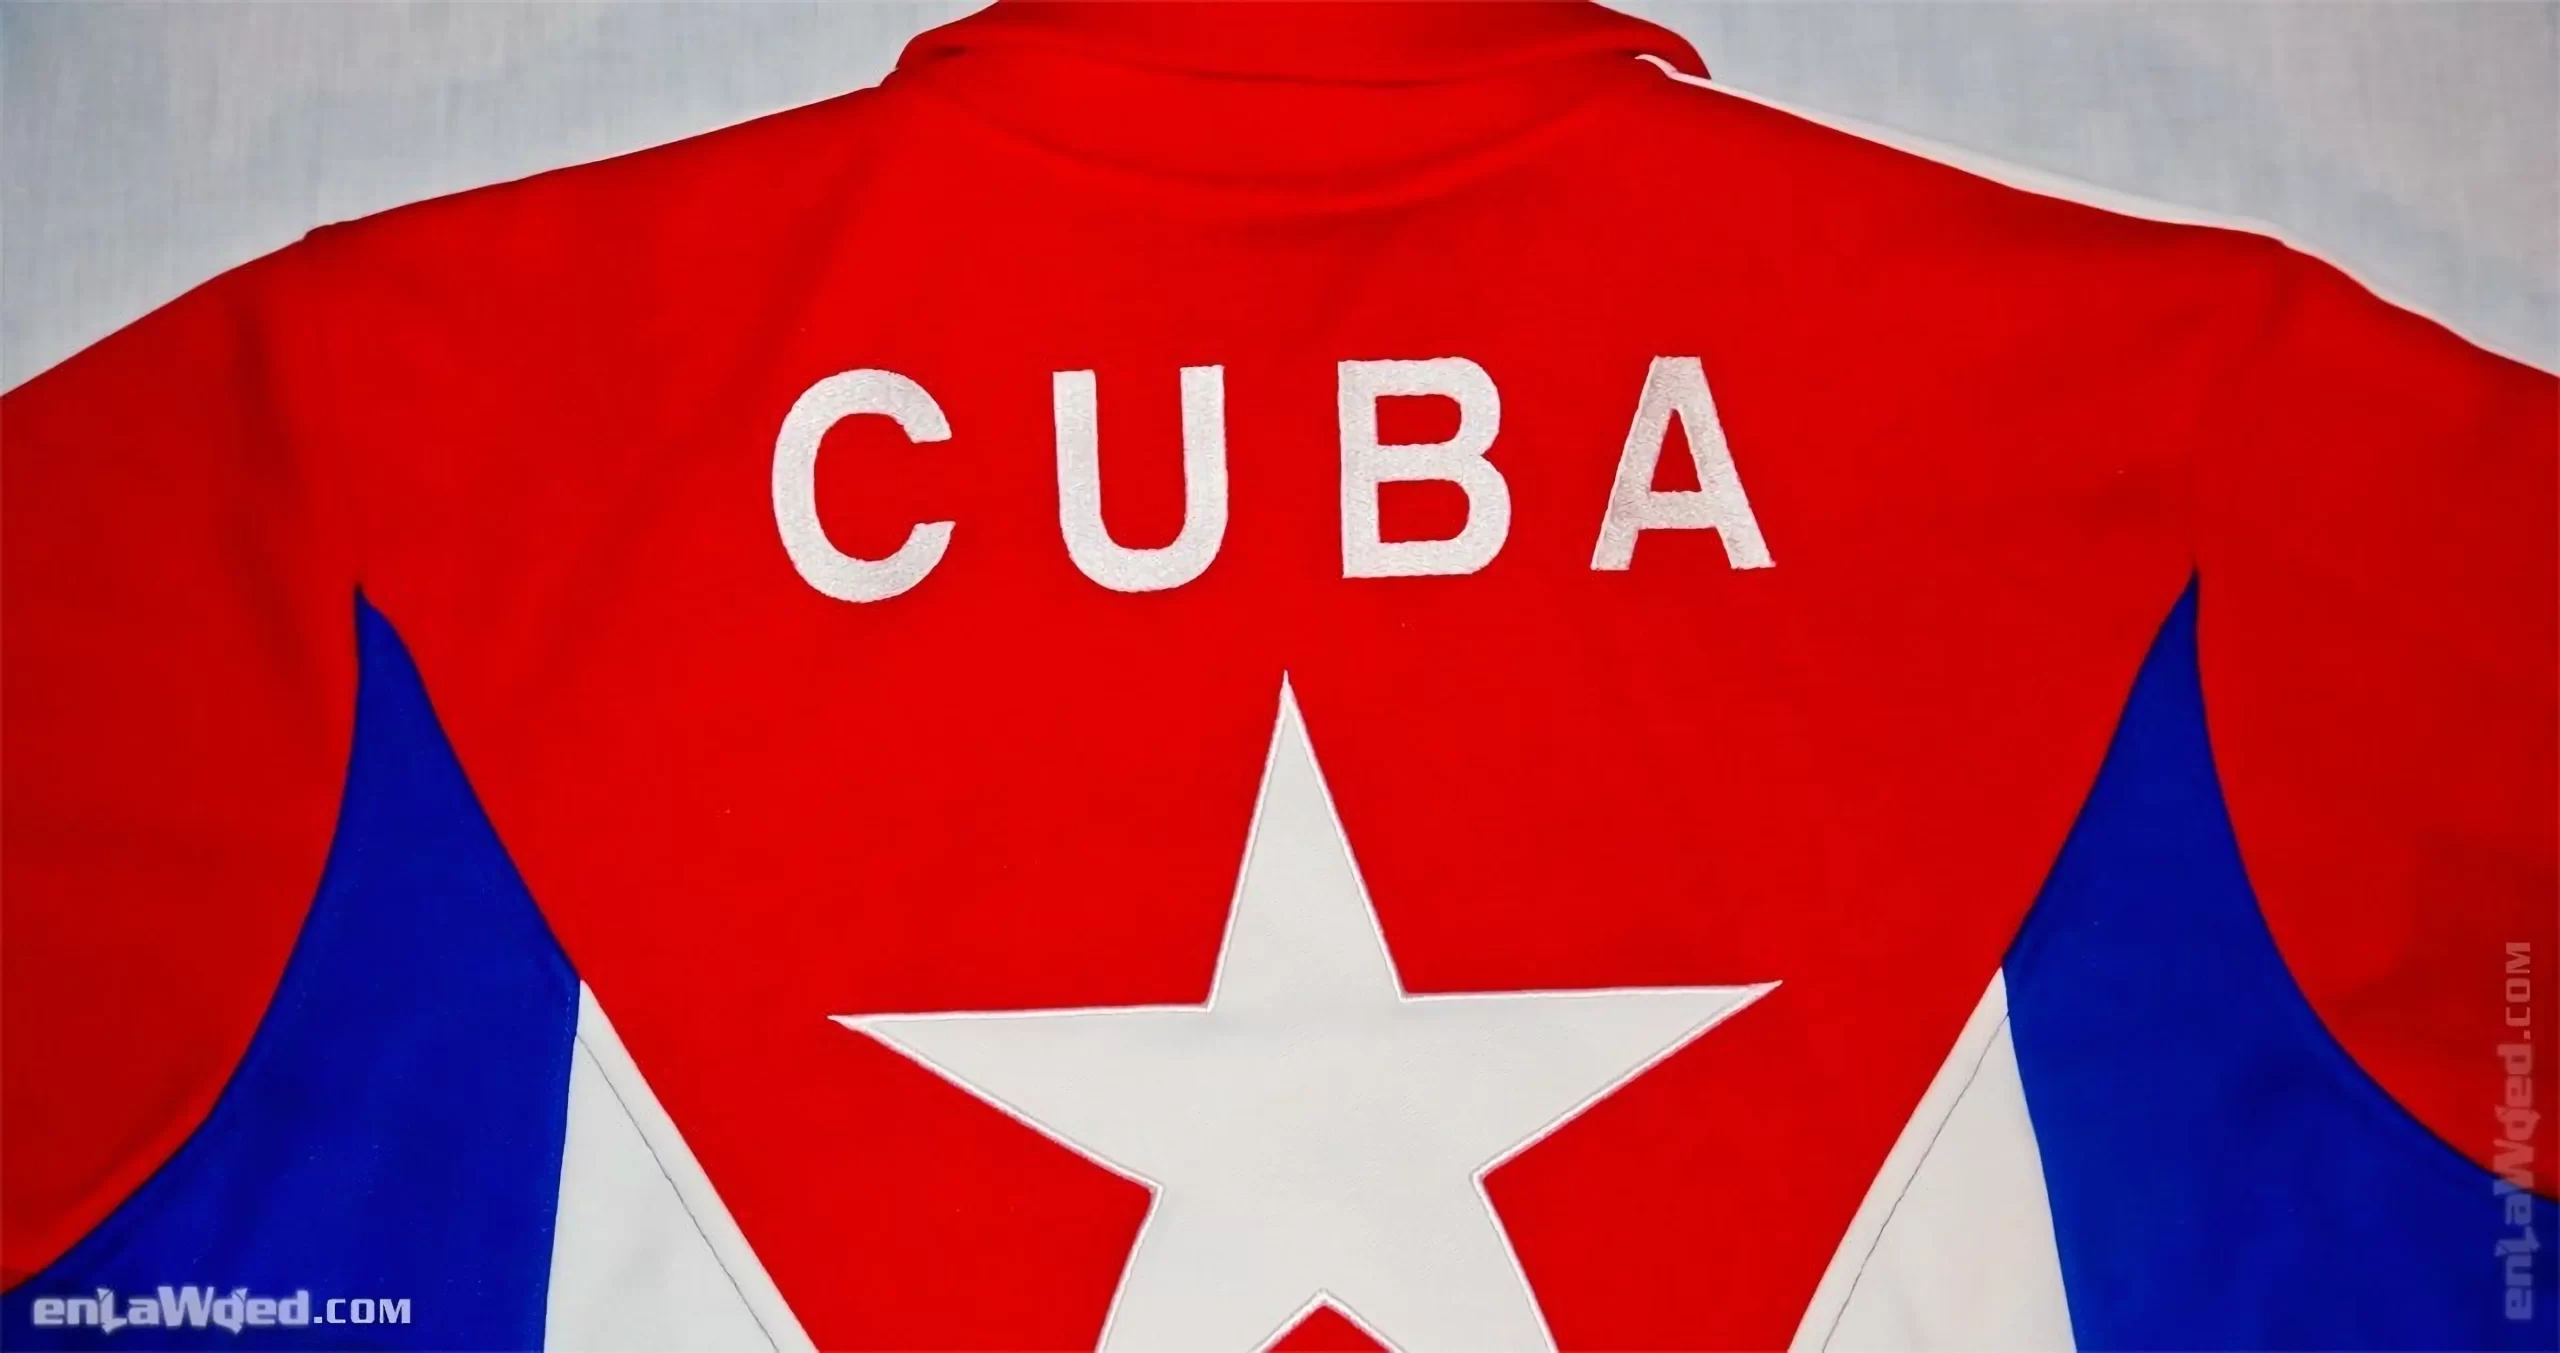 Men’s 2007 Cuba Track Top by Adidas Originals: Sublime (EnLawded.com file #lmchk89955ip2y121684kg9st)